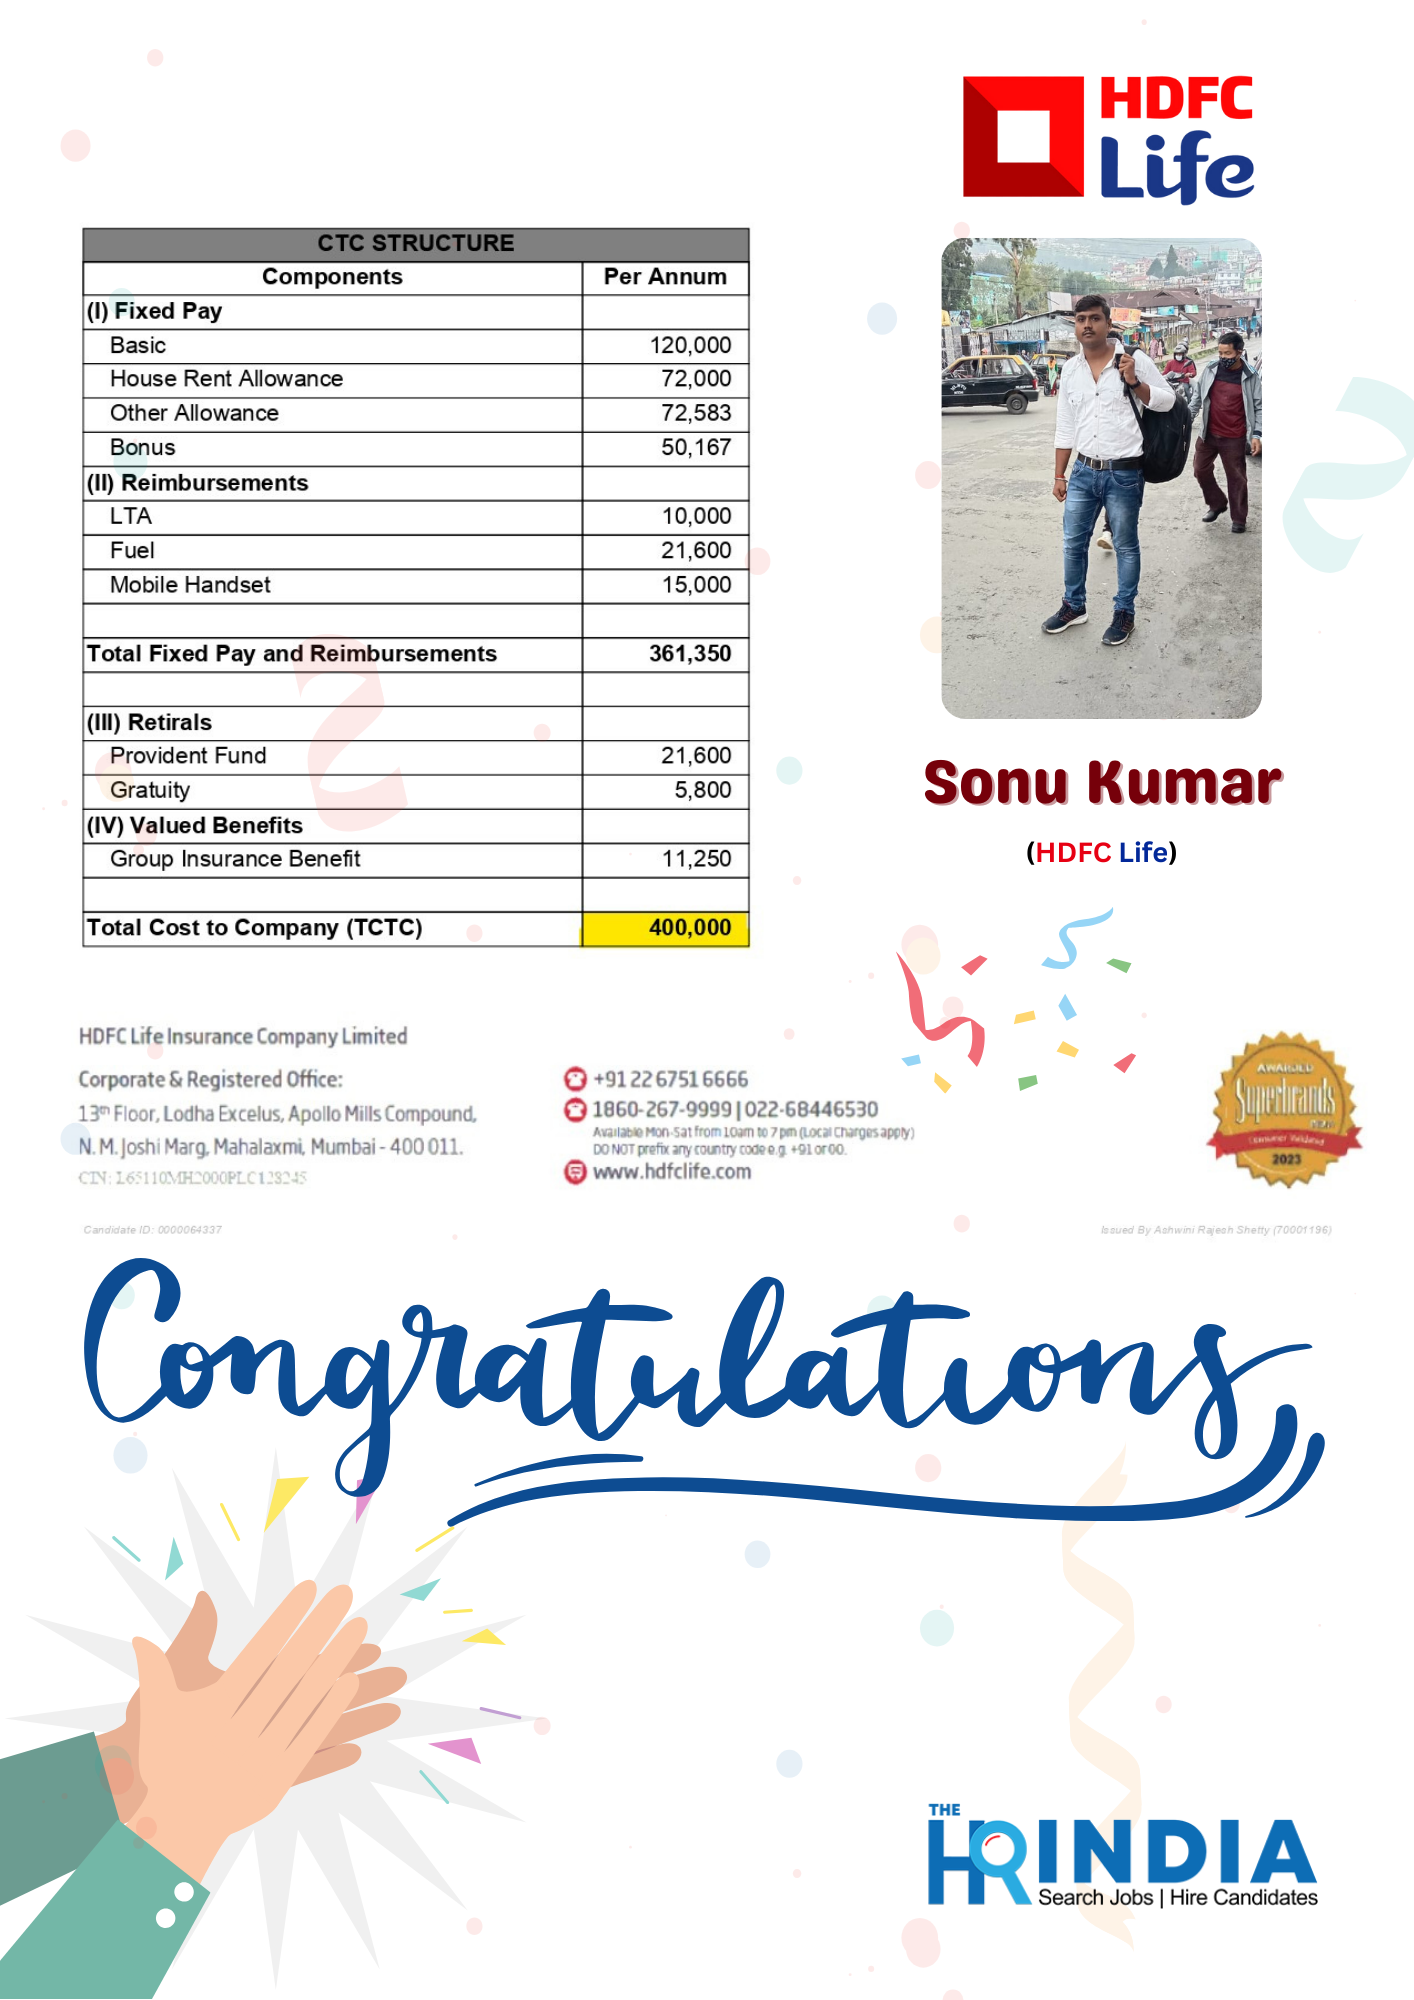 Sonu Kumar  | The HR India